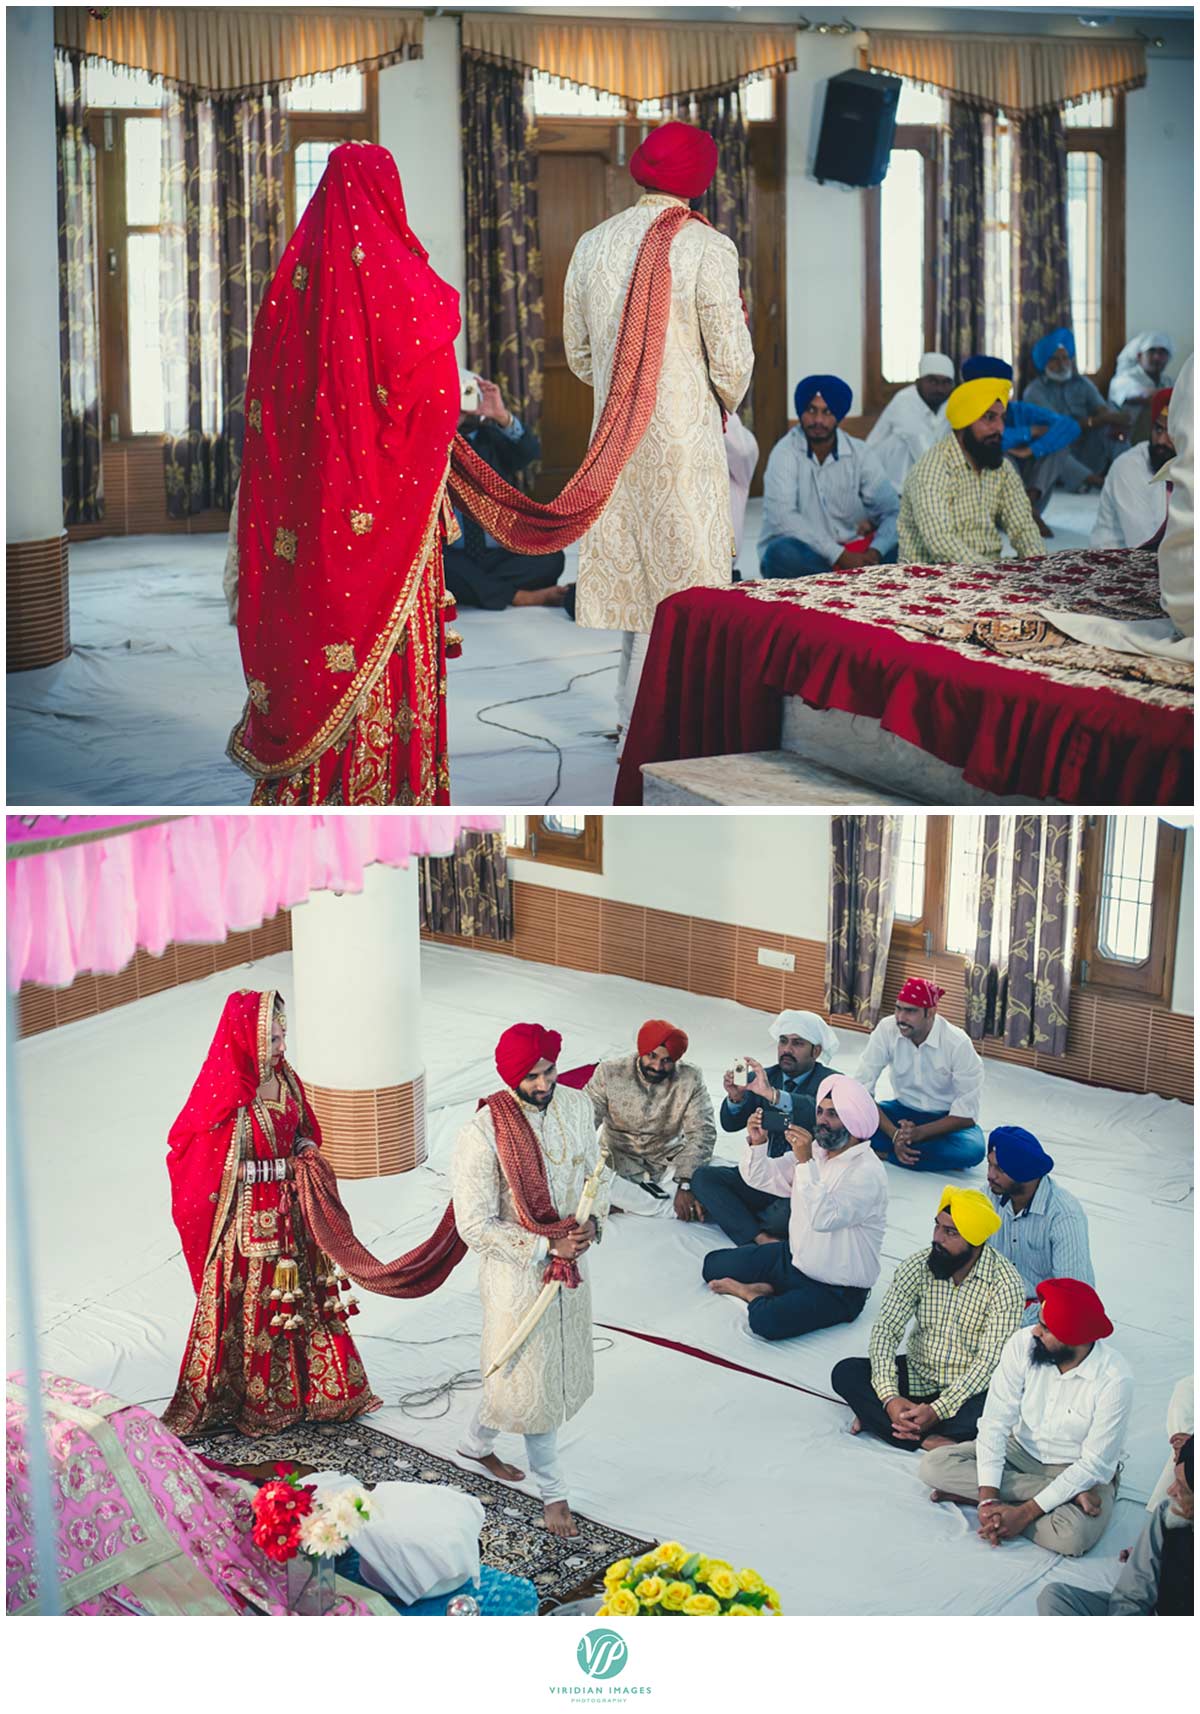 India_Chandigarh_Wedding_Viridian_Images_Photography_poto_25